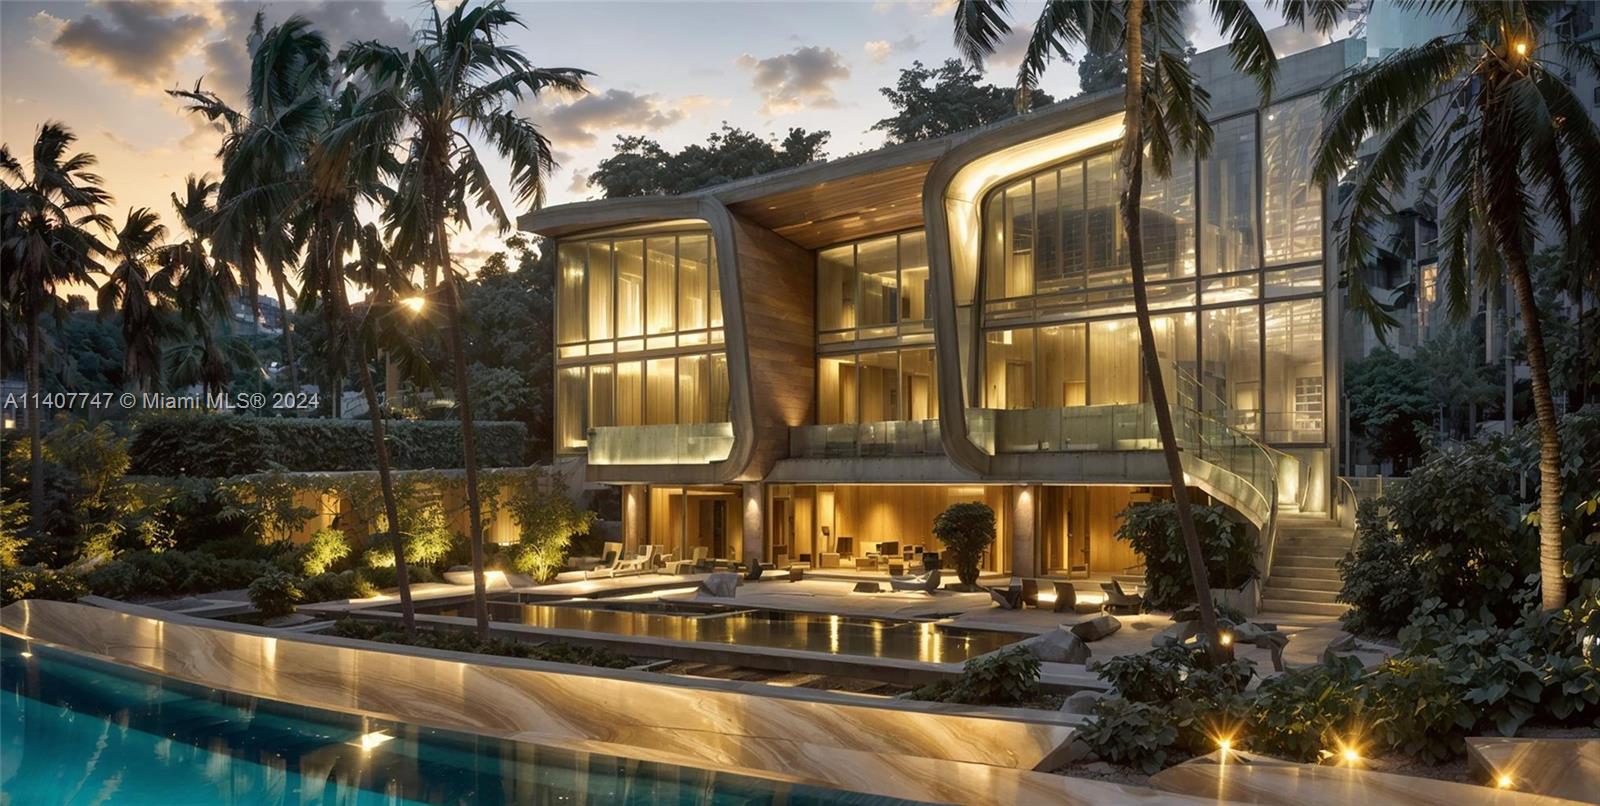 Property for Sale at 316 S Coconut Ln, Miami Beach, Miami-Dade County, Florida - Bedrooms: 4 
Bathrooms: 5  - $10,770,000